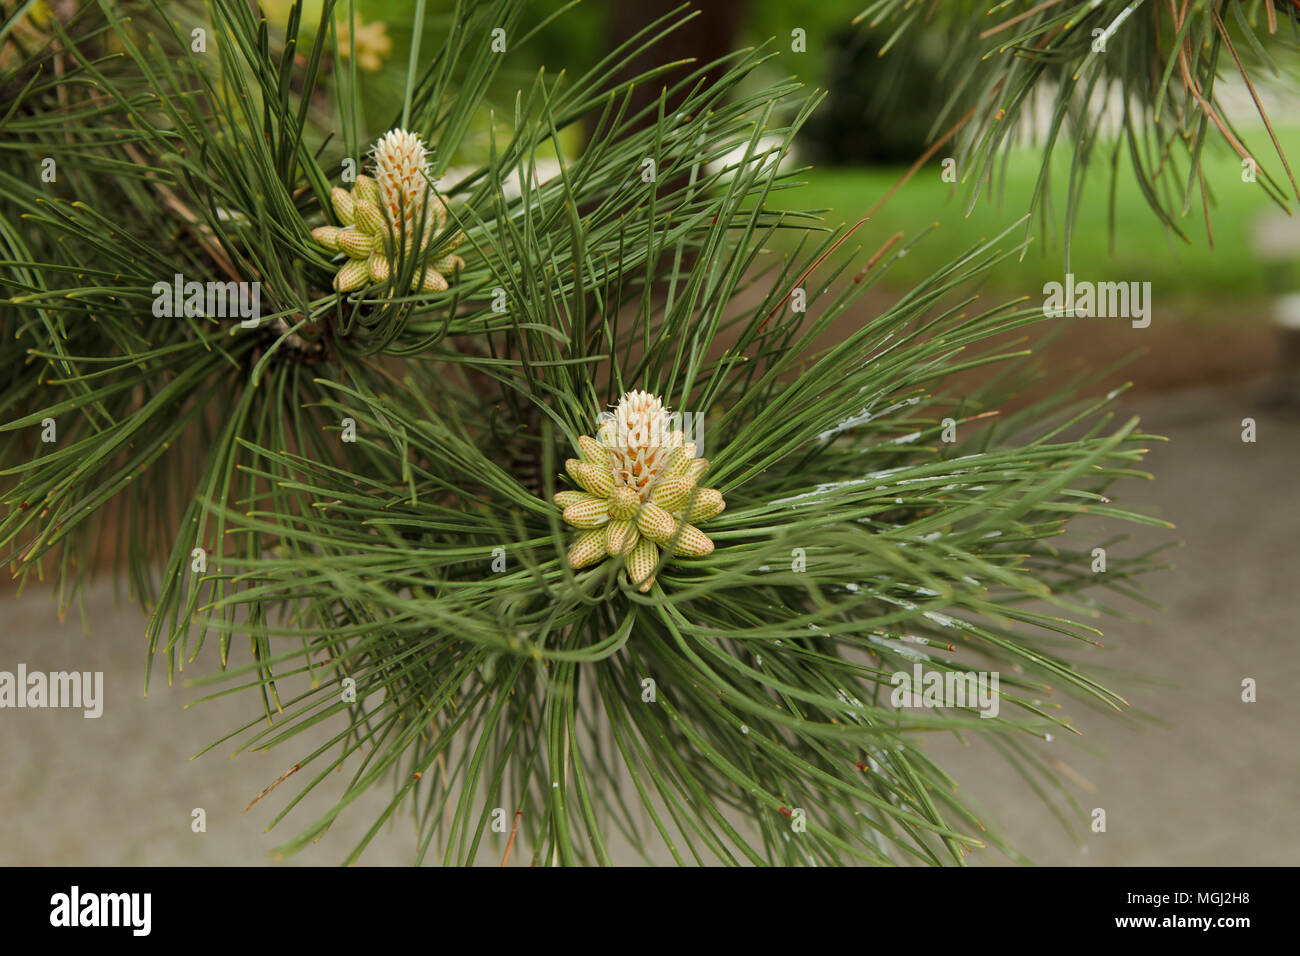 pine shoots close up Stock Photo